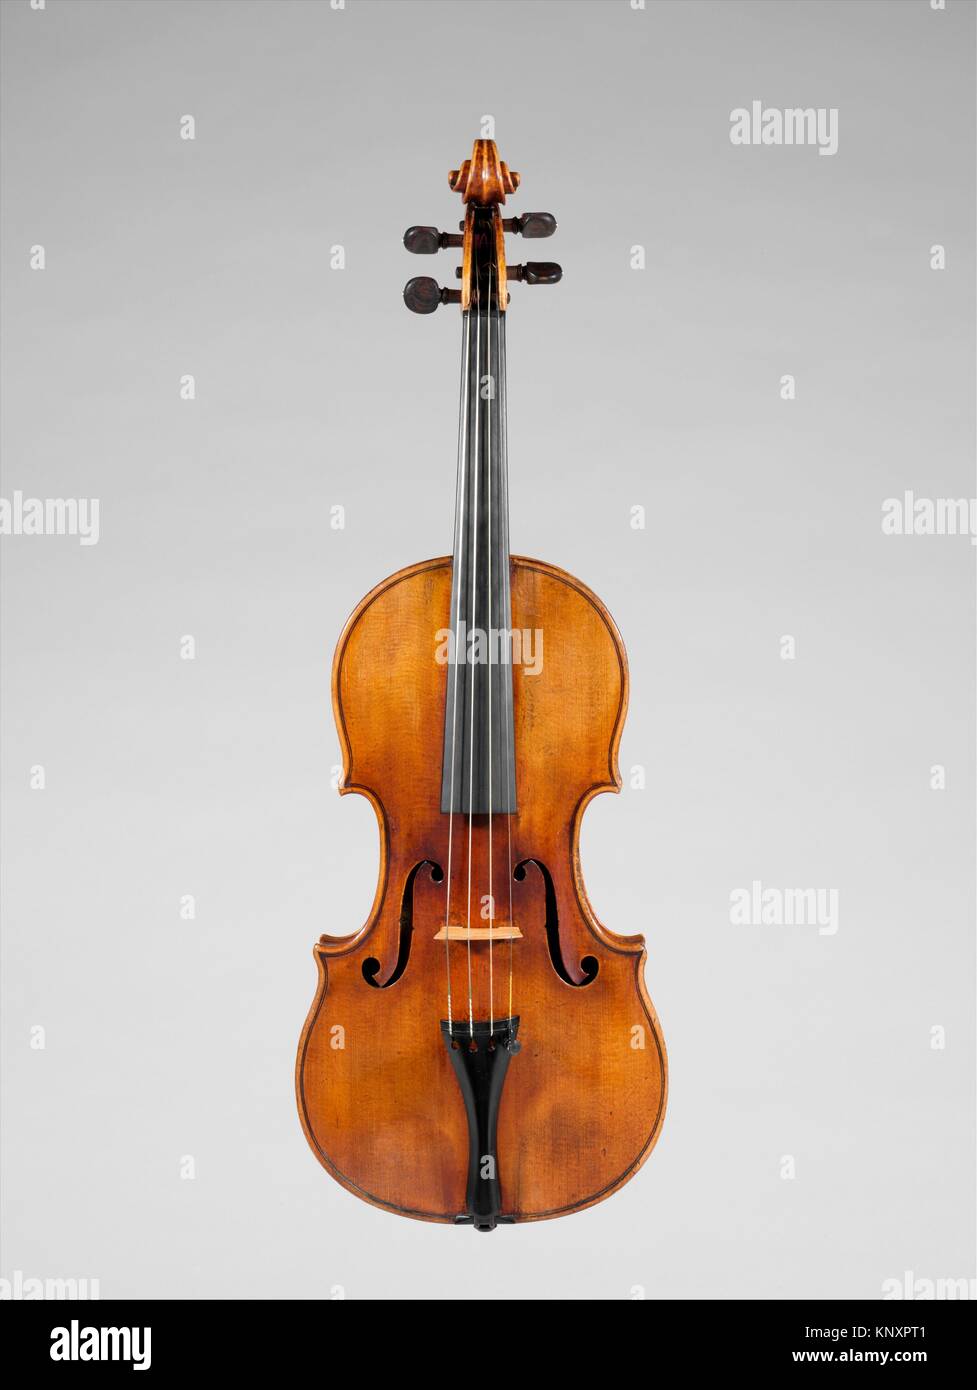 Francesca le violon. Bouilloire : Antonio Stradivari (Italien, Cremona Cremona 1644-1737) ; Date : 1694 ; Géographie : Cremona, Italie ; Culture : italien Banque D'Images